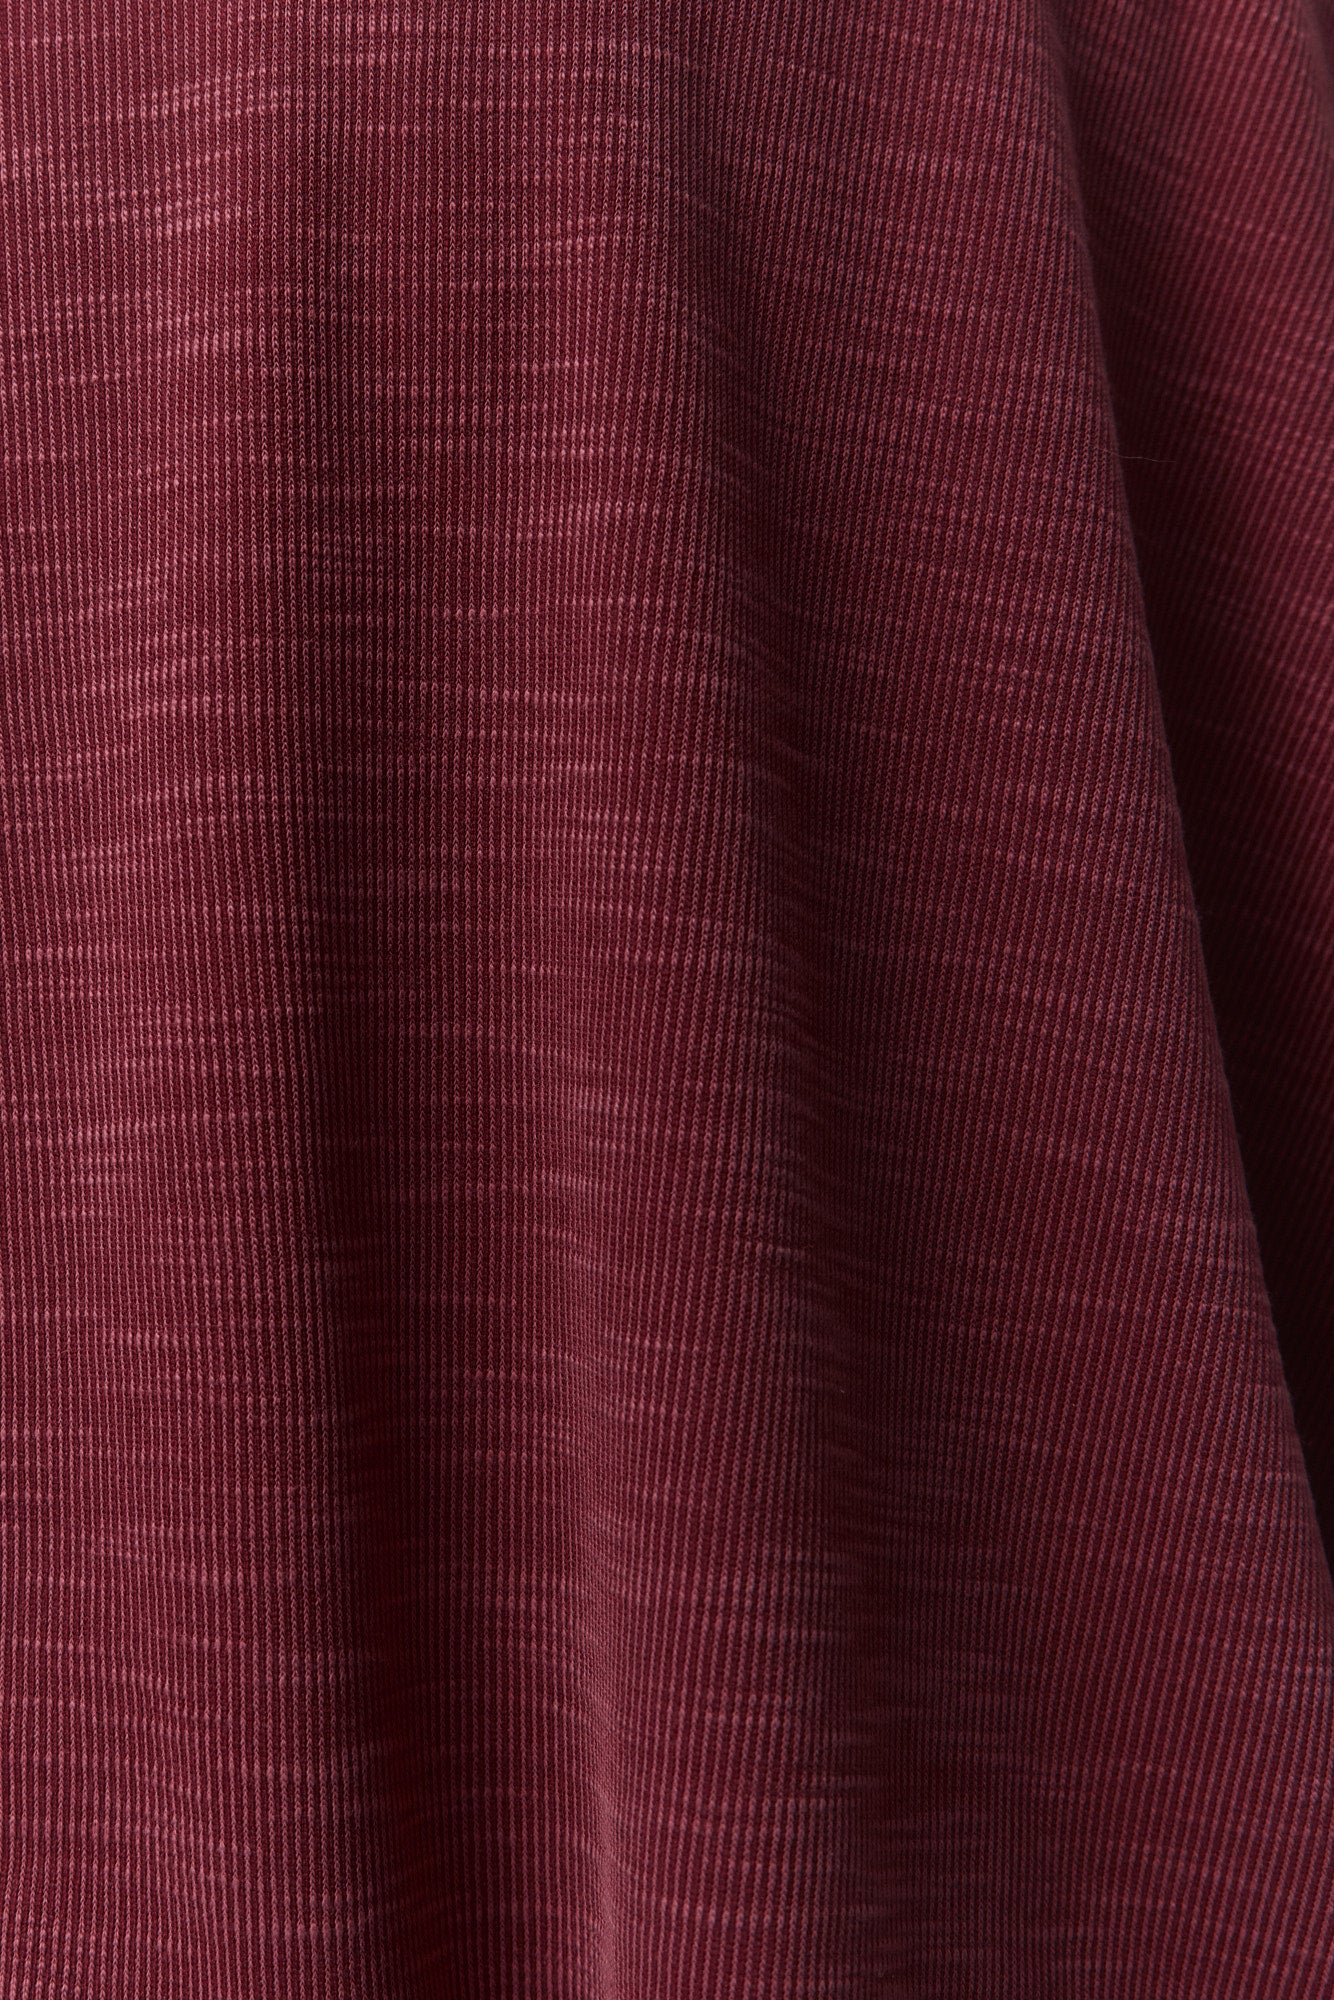 Robe framboise ample encolure en V | Vero JOELLE Collection